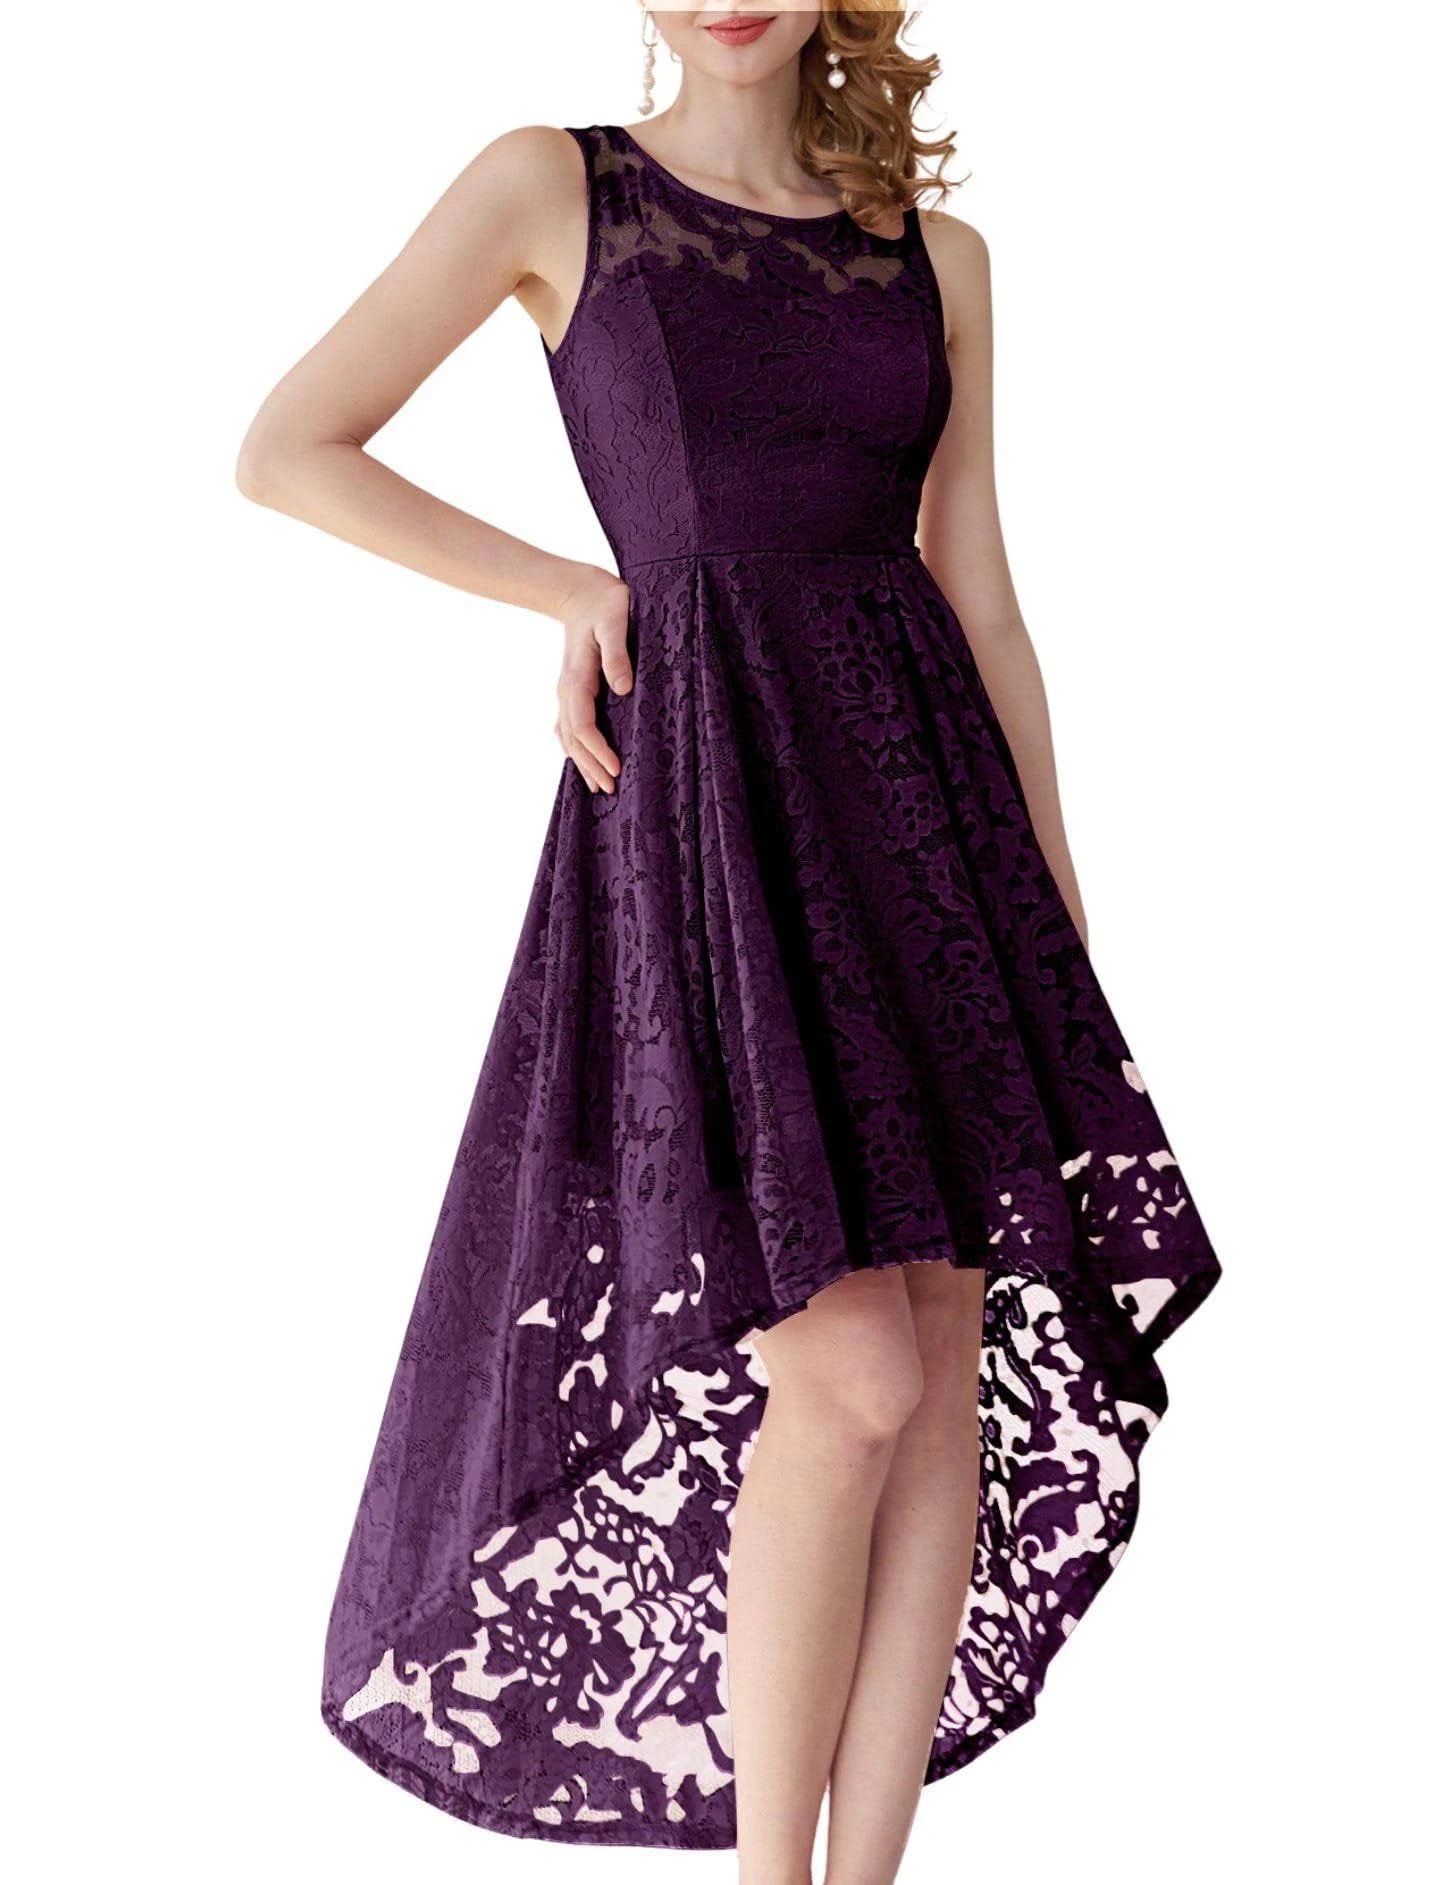 Elegant Floral Lace High-Low Cocktail Dress for Women | Image